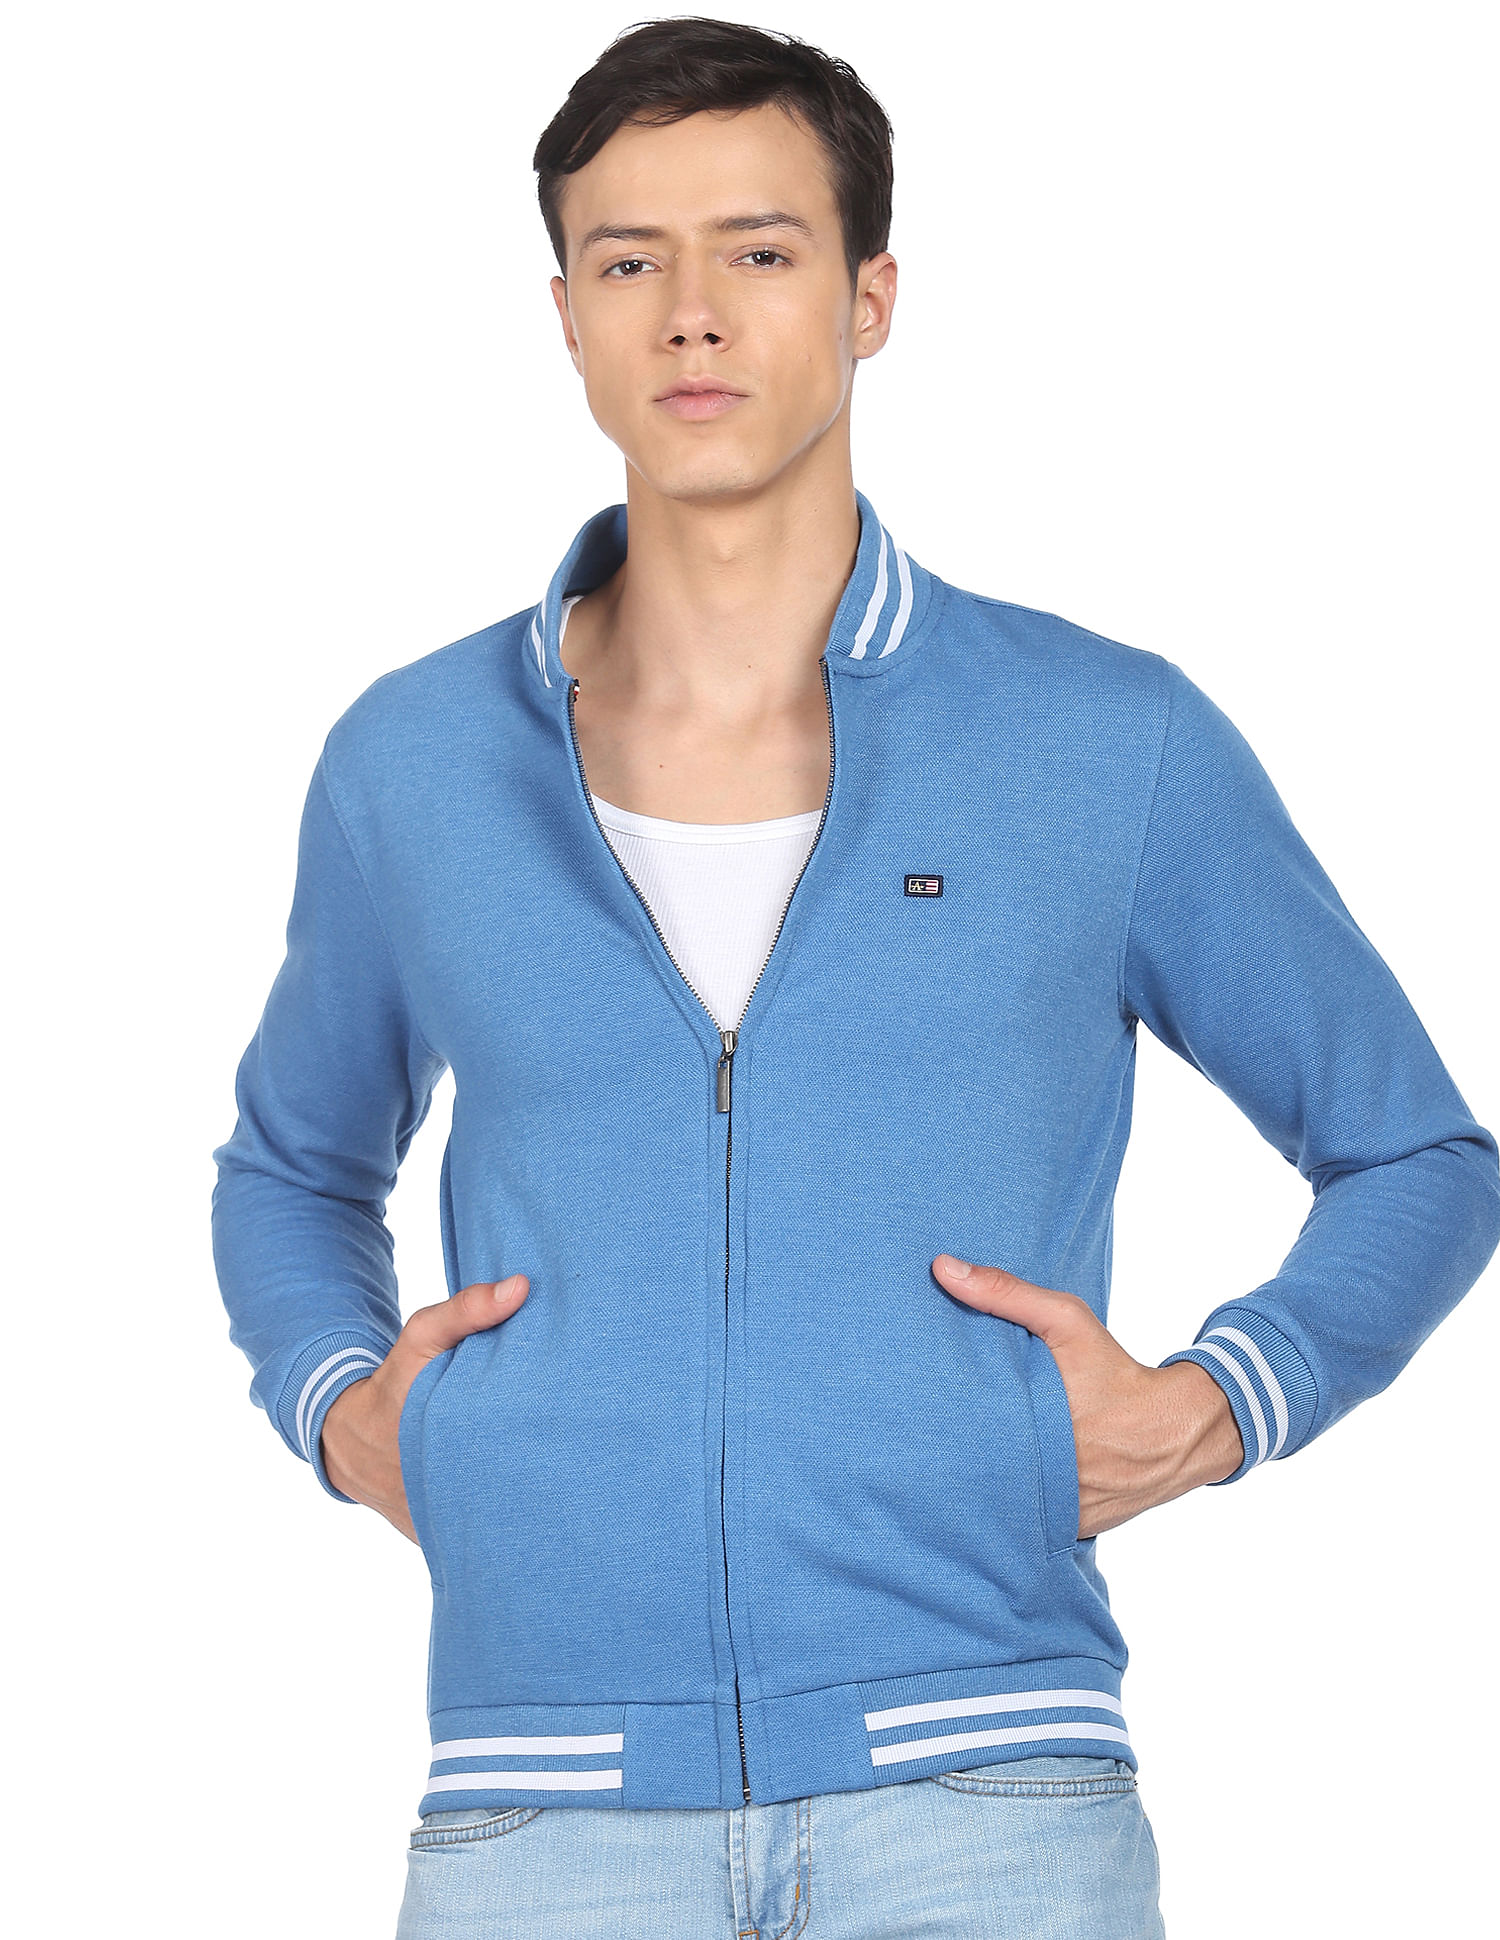 Buy Arrow Sports Men Blue Stand Collar Heathered Knit Jacket